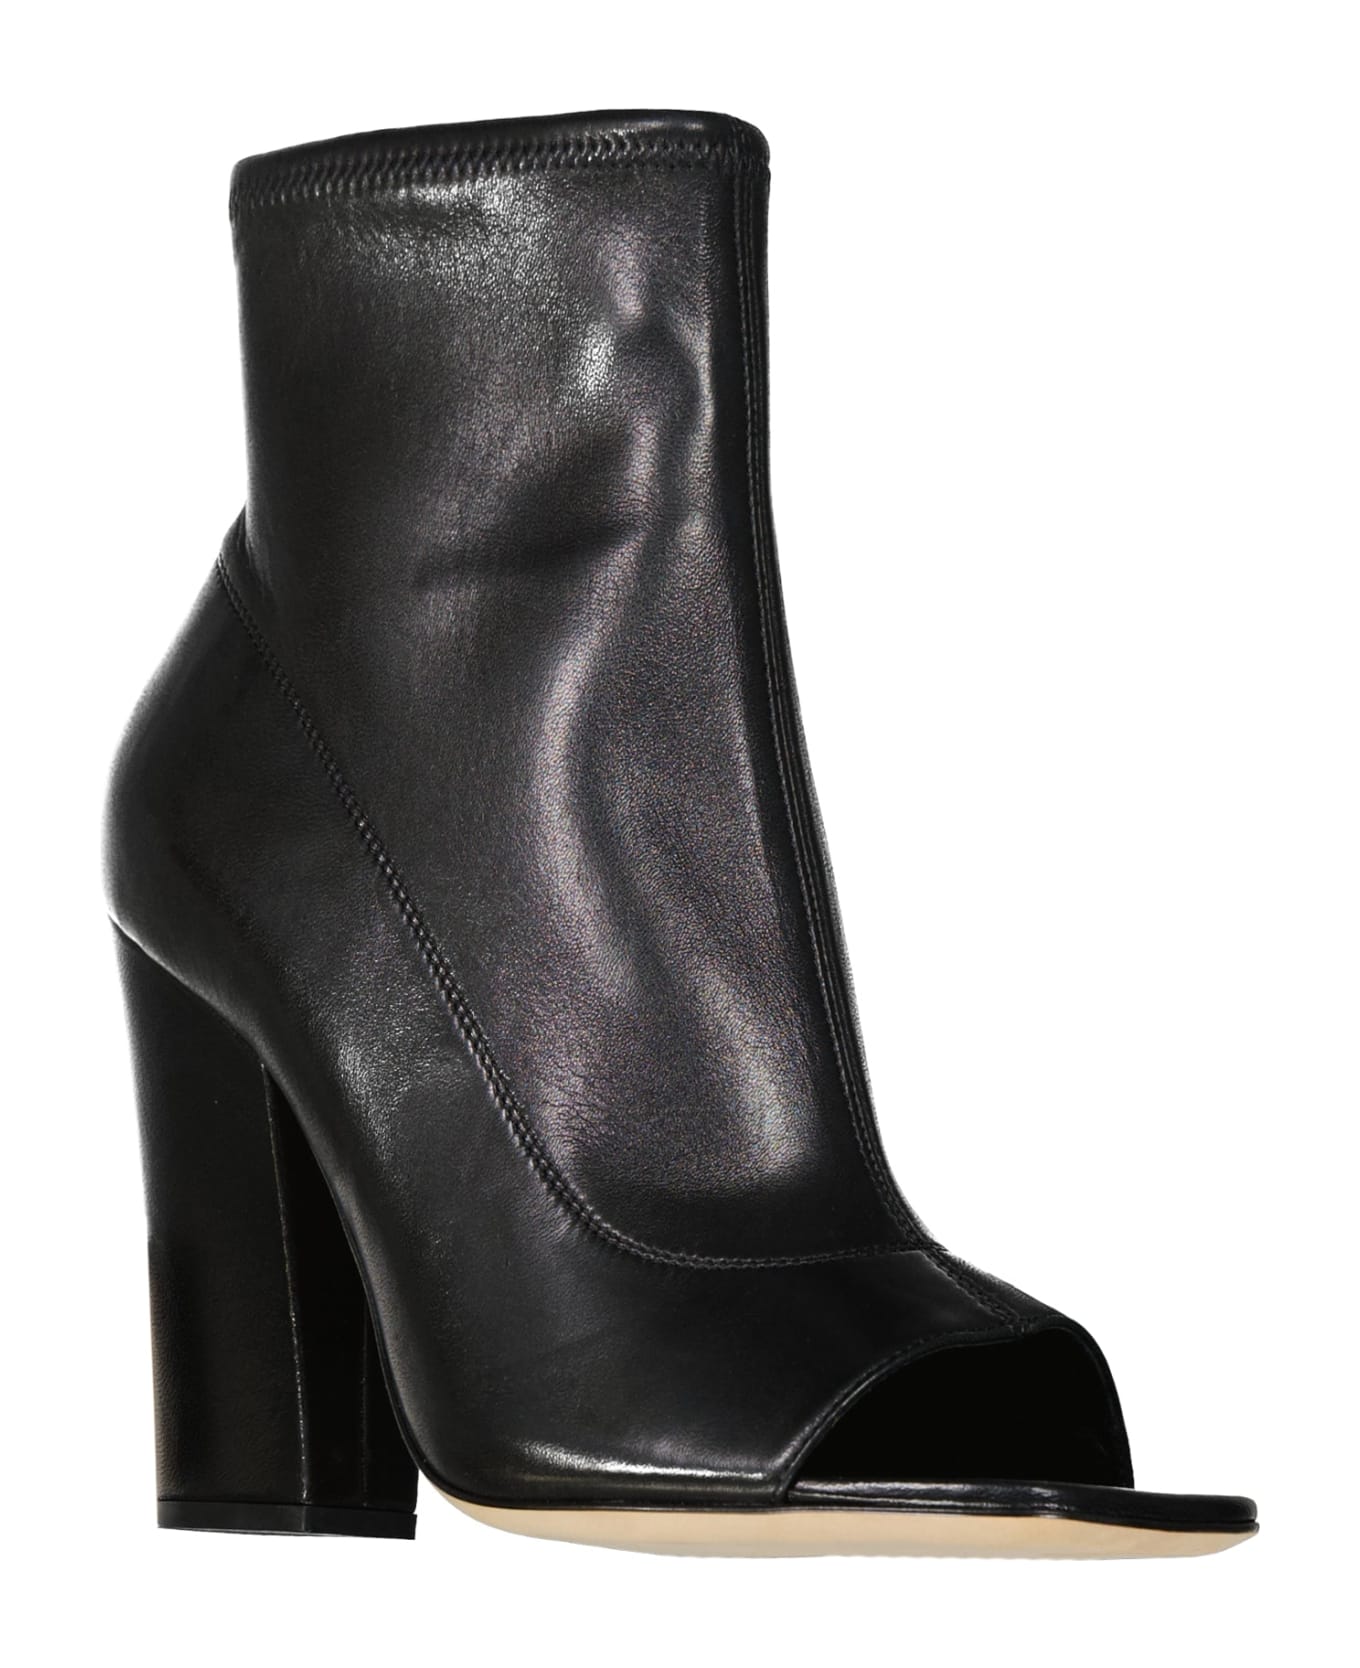 Sergio Rossi Leather Boots - Black ブーツ